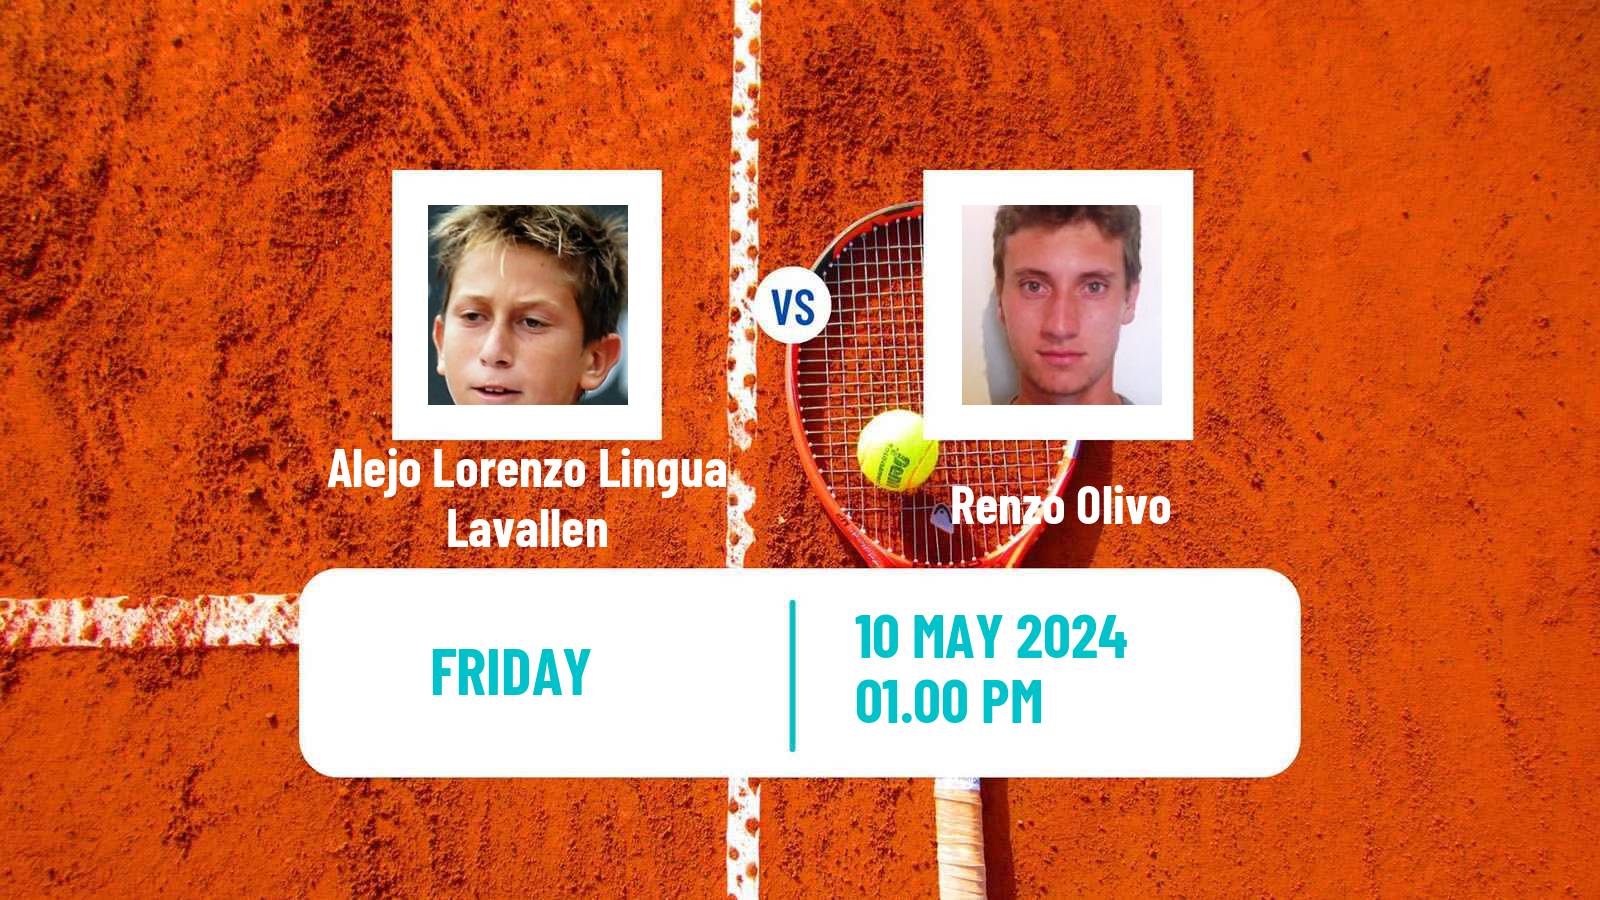 Tennis Santos Challenger Men Alejo Lorenzo Lingua Lavallen - Renzo Olivo